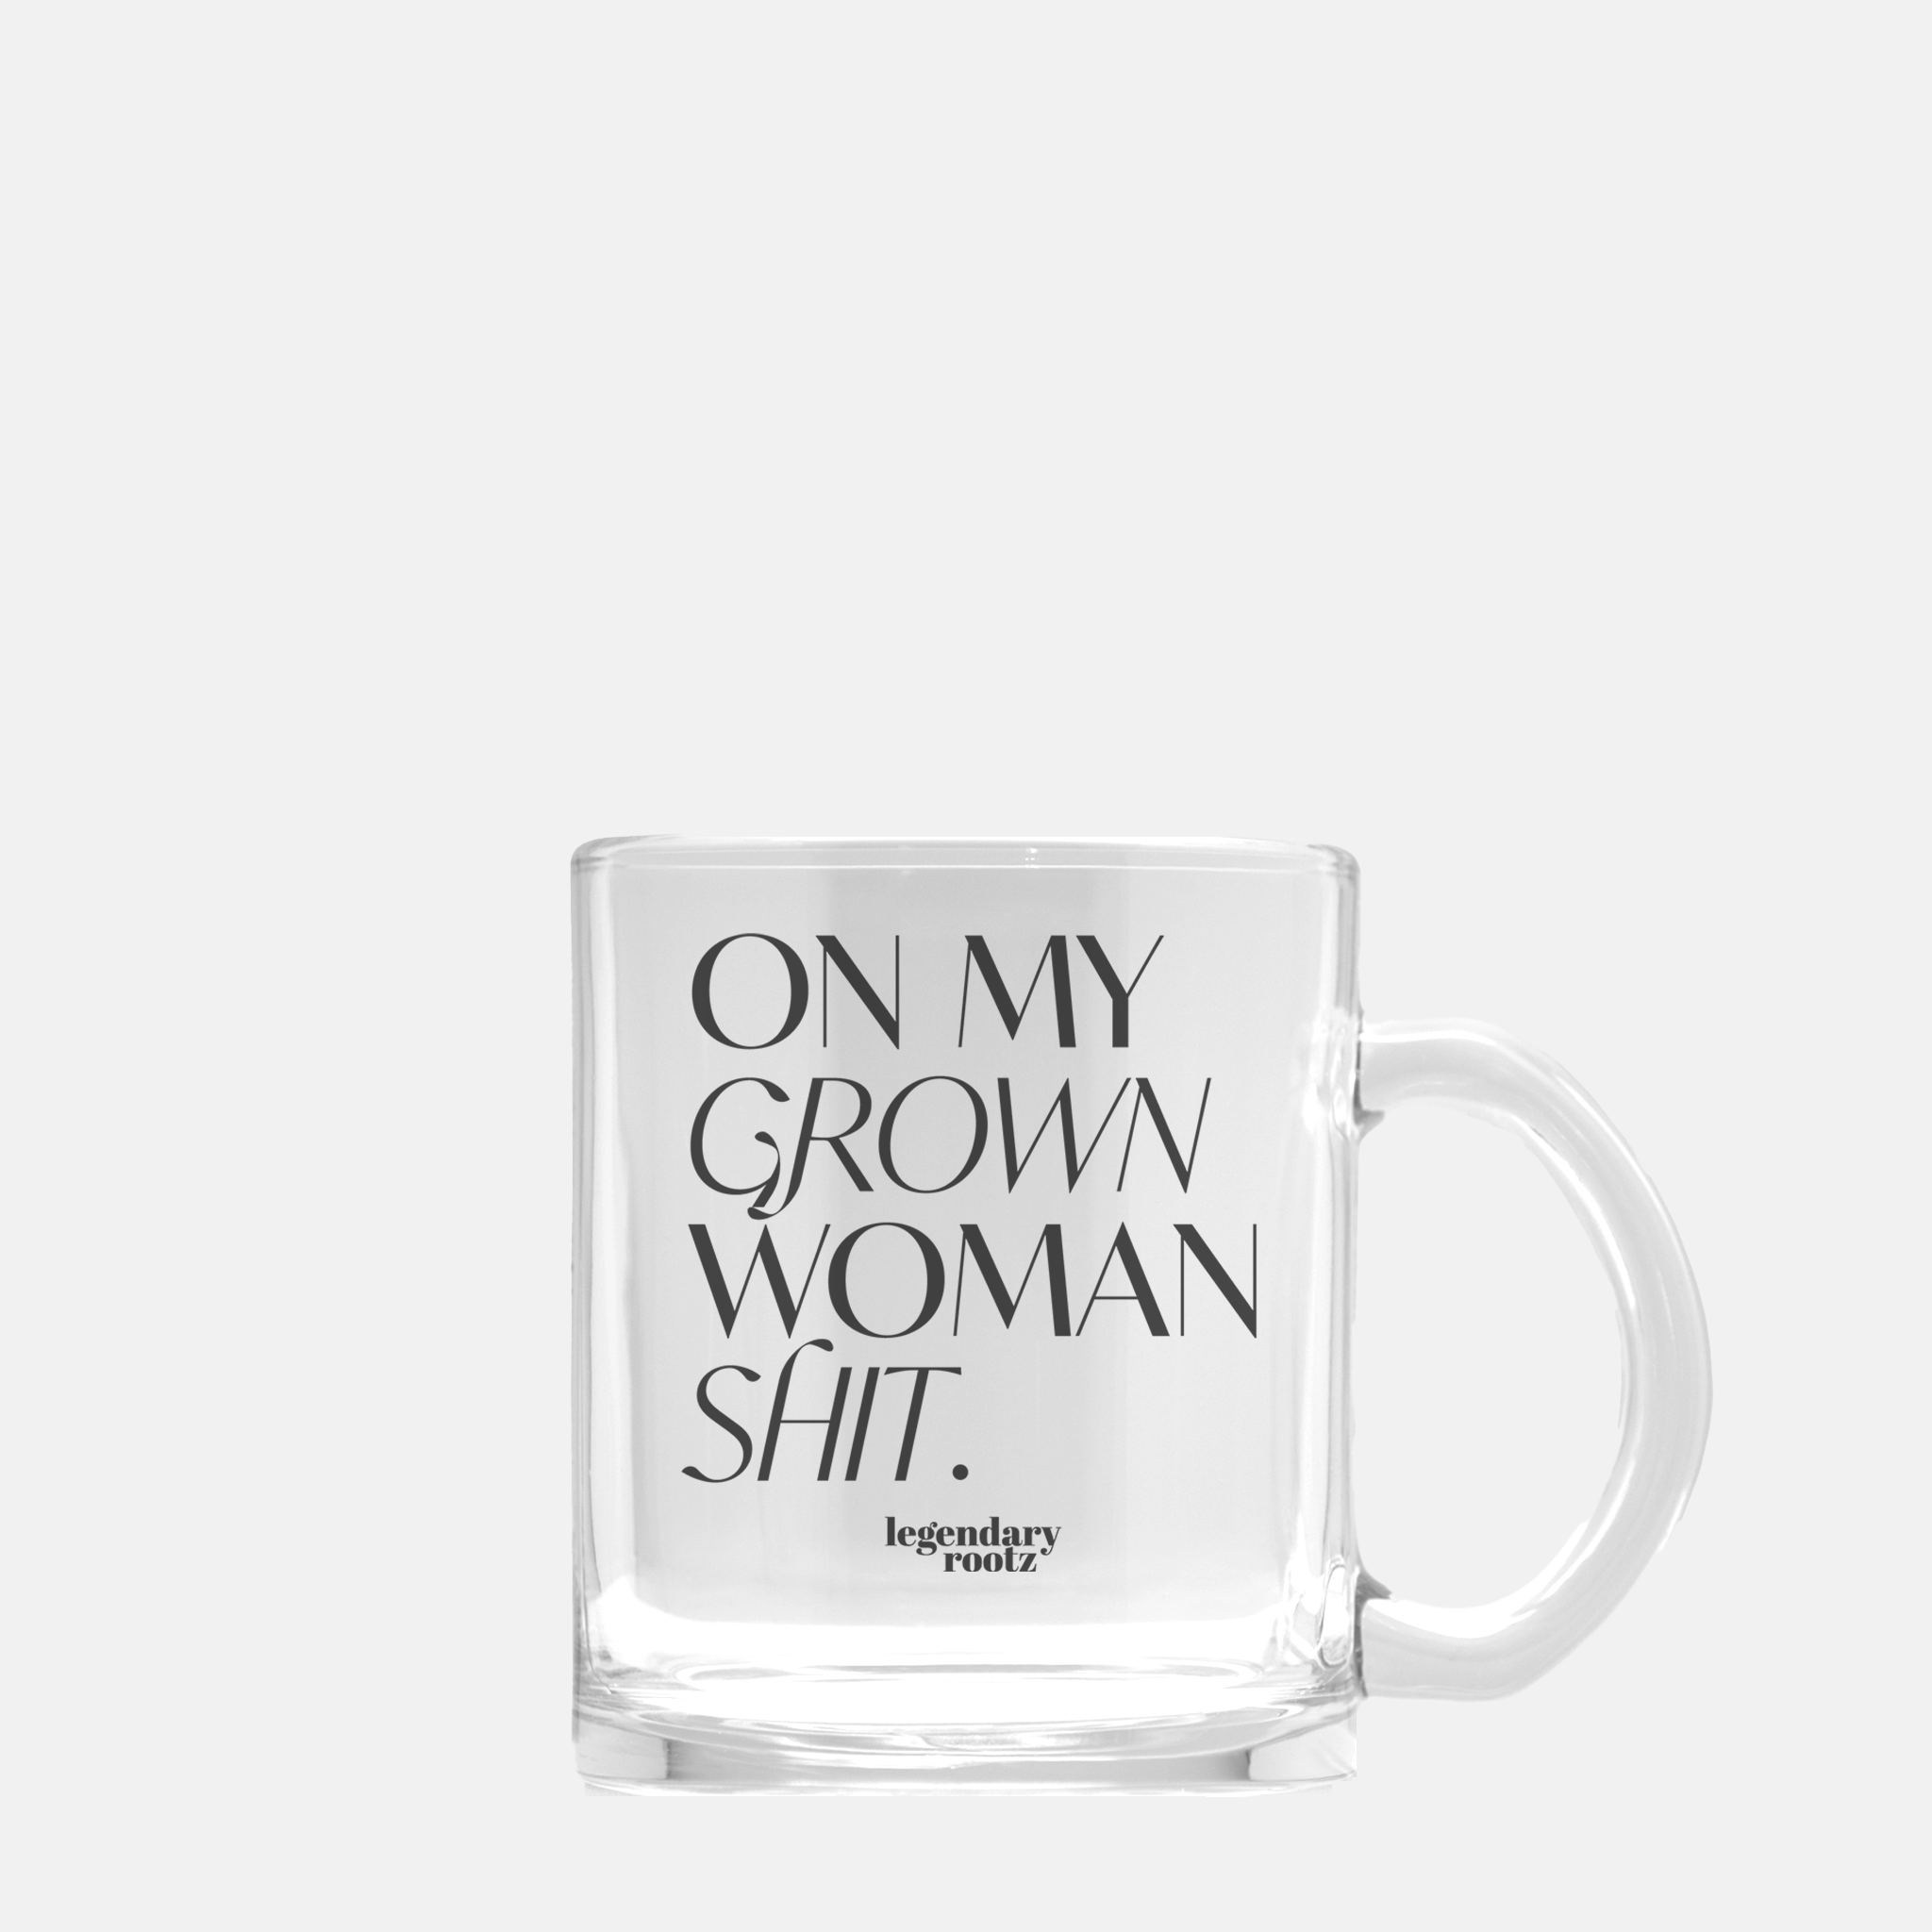 On My Grown Woman Sh*t | Clear Glass Mug